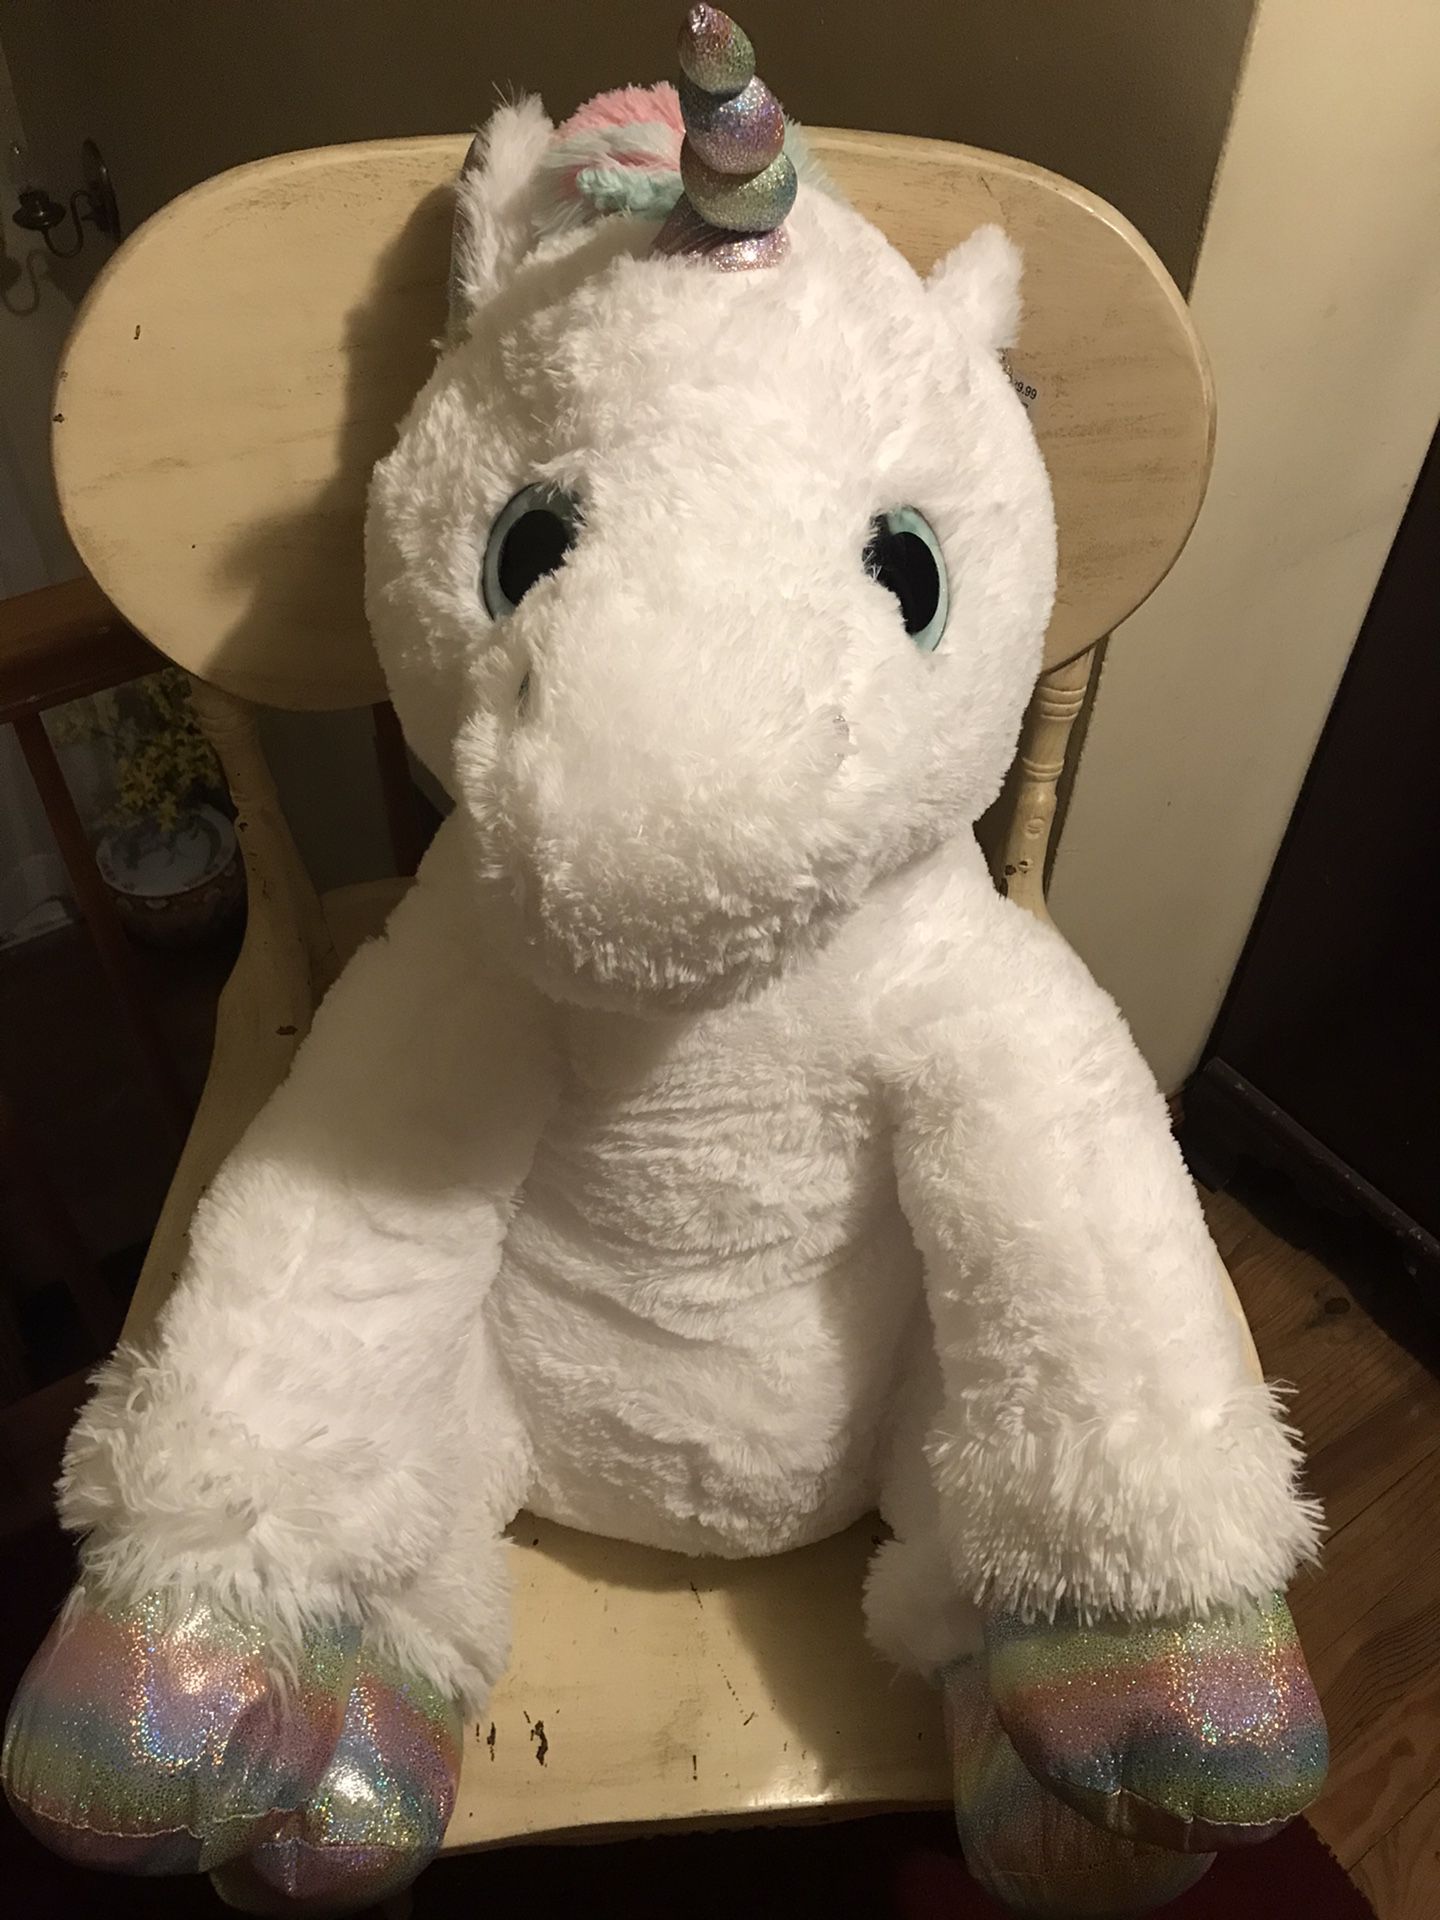 New Huge 28” sitting unicorn stuffed animal